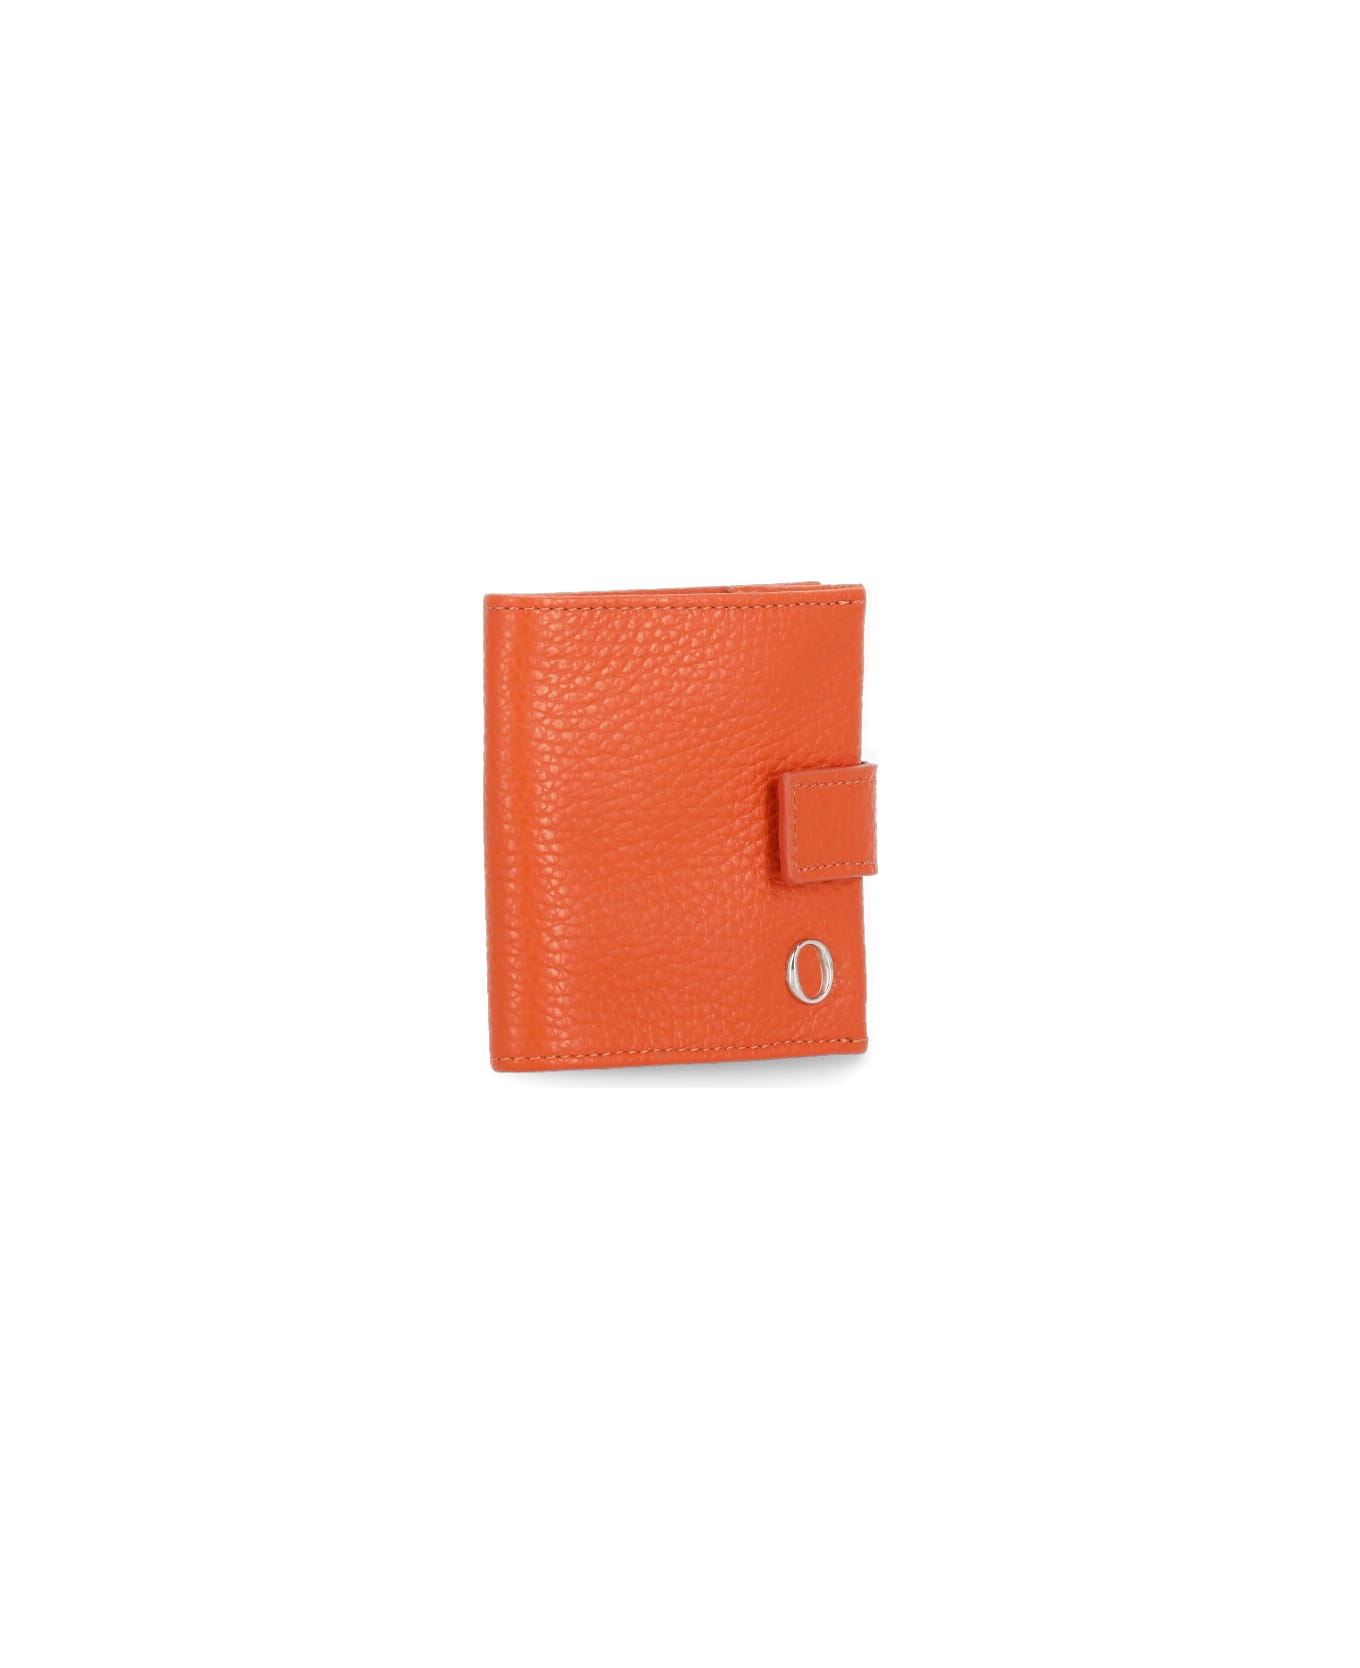 Orciani Micron Leather Purse - Orange 財布